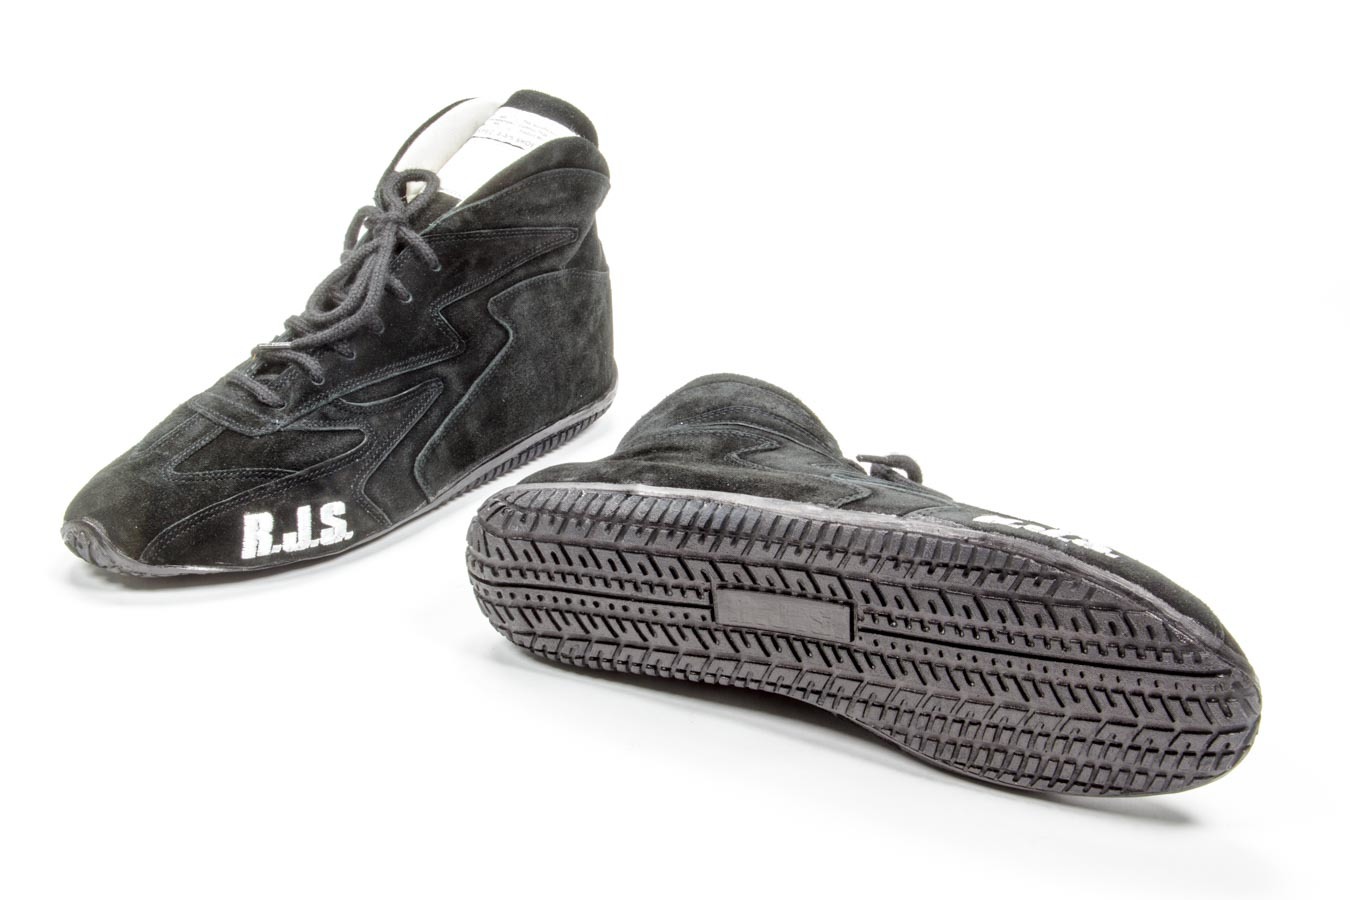 RJS, Redline Racing Shoe Mid-Top Black Size 12 SFI-5